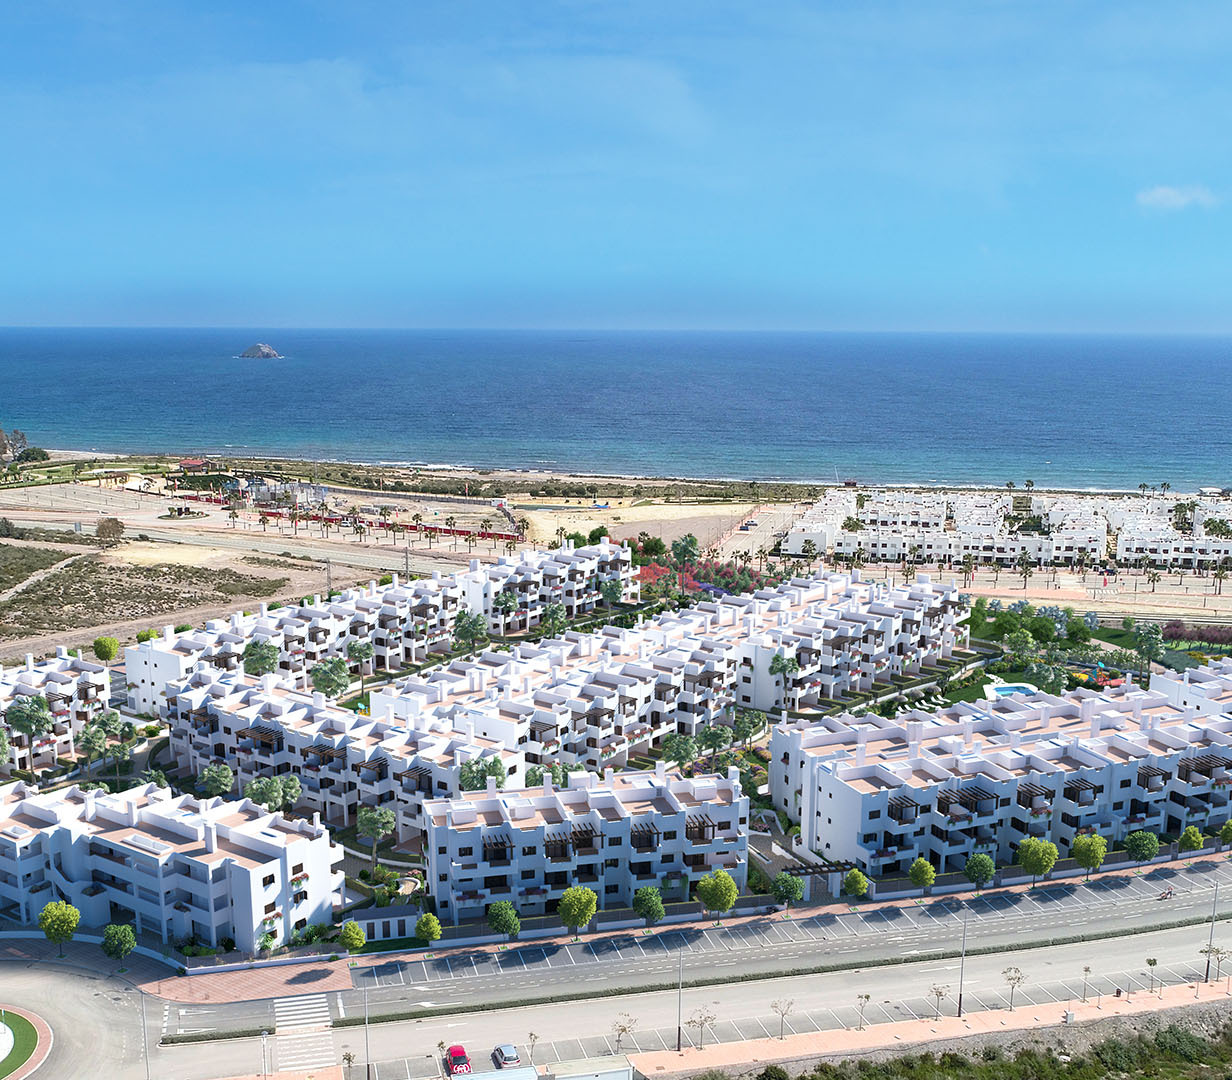 A unique newly built residential area on the Costa de Almería